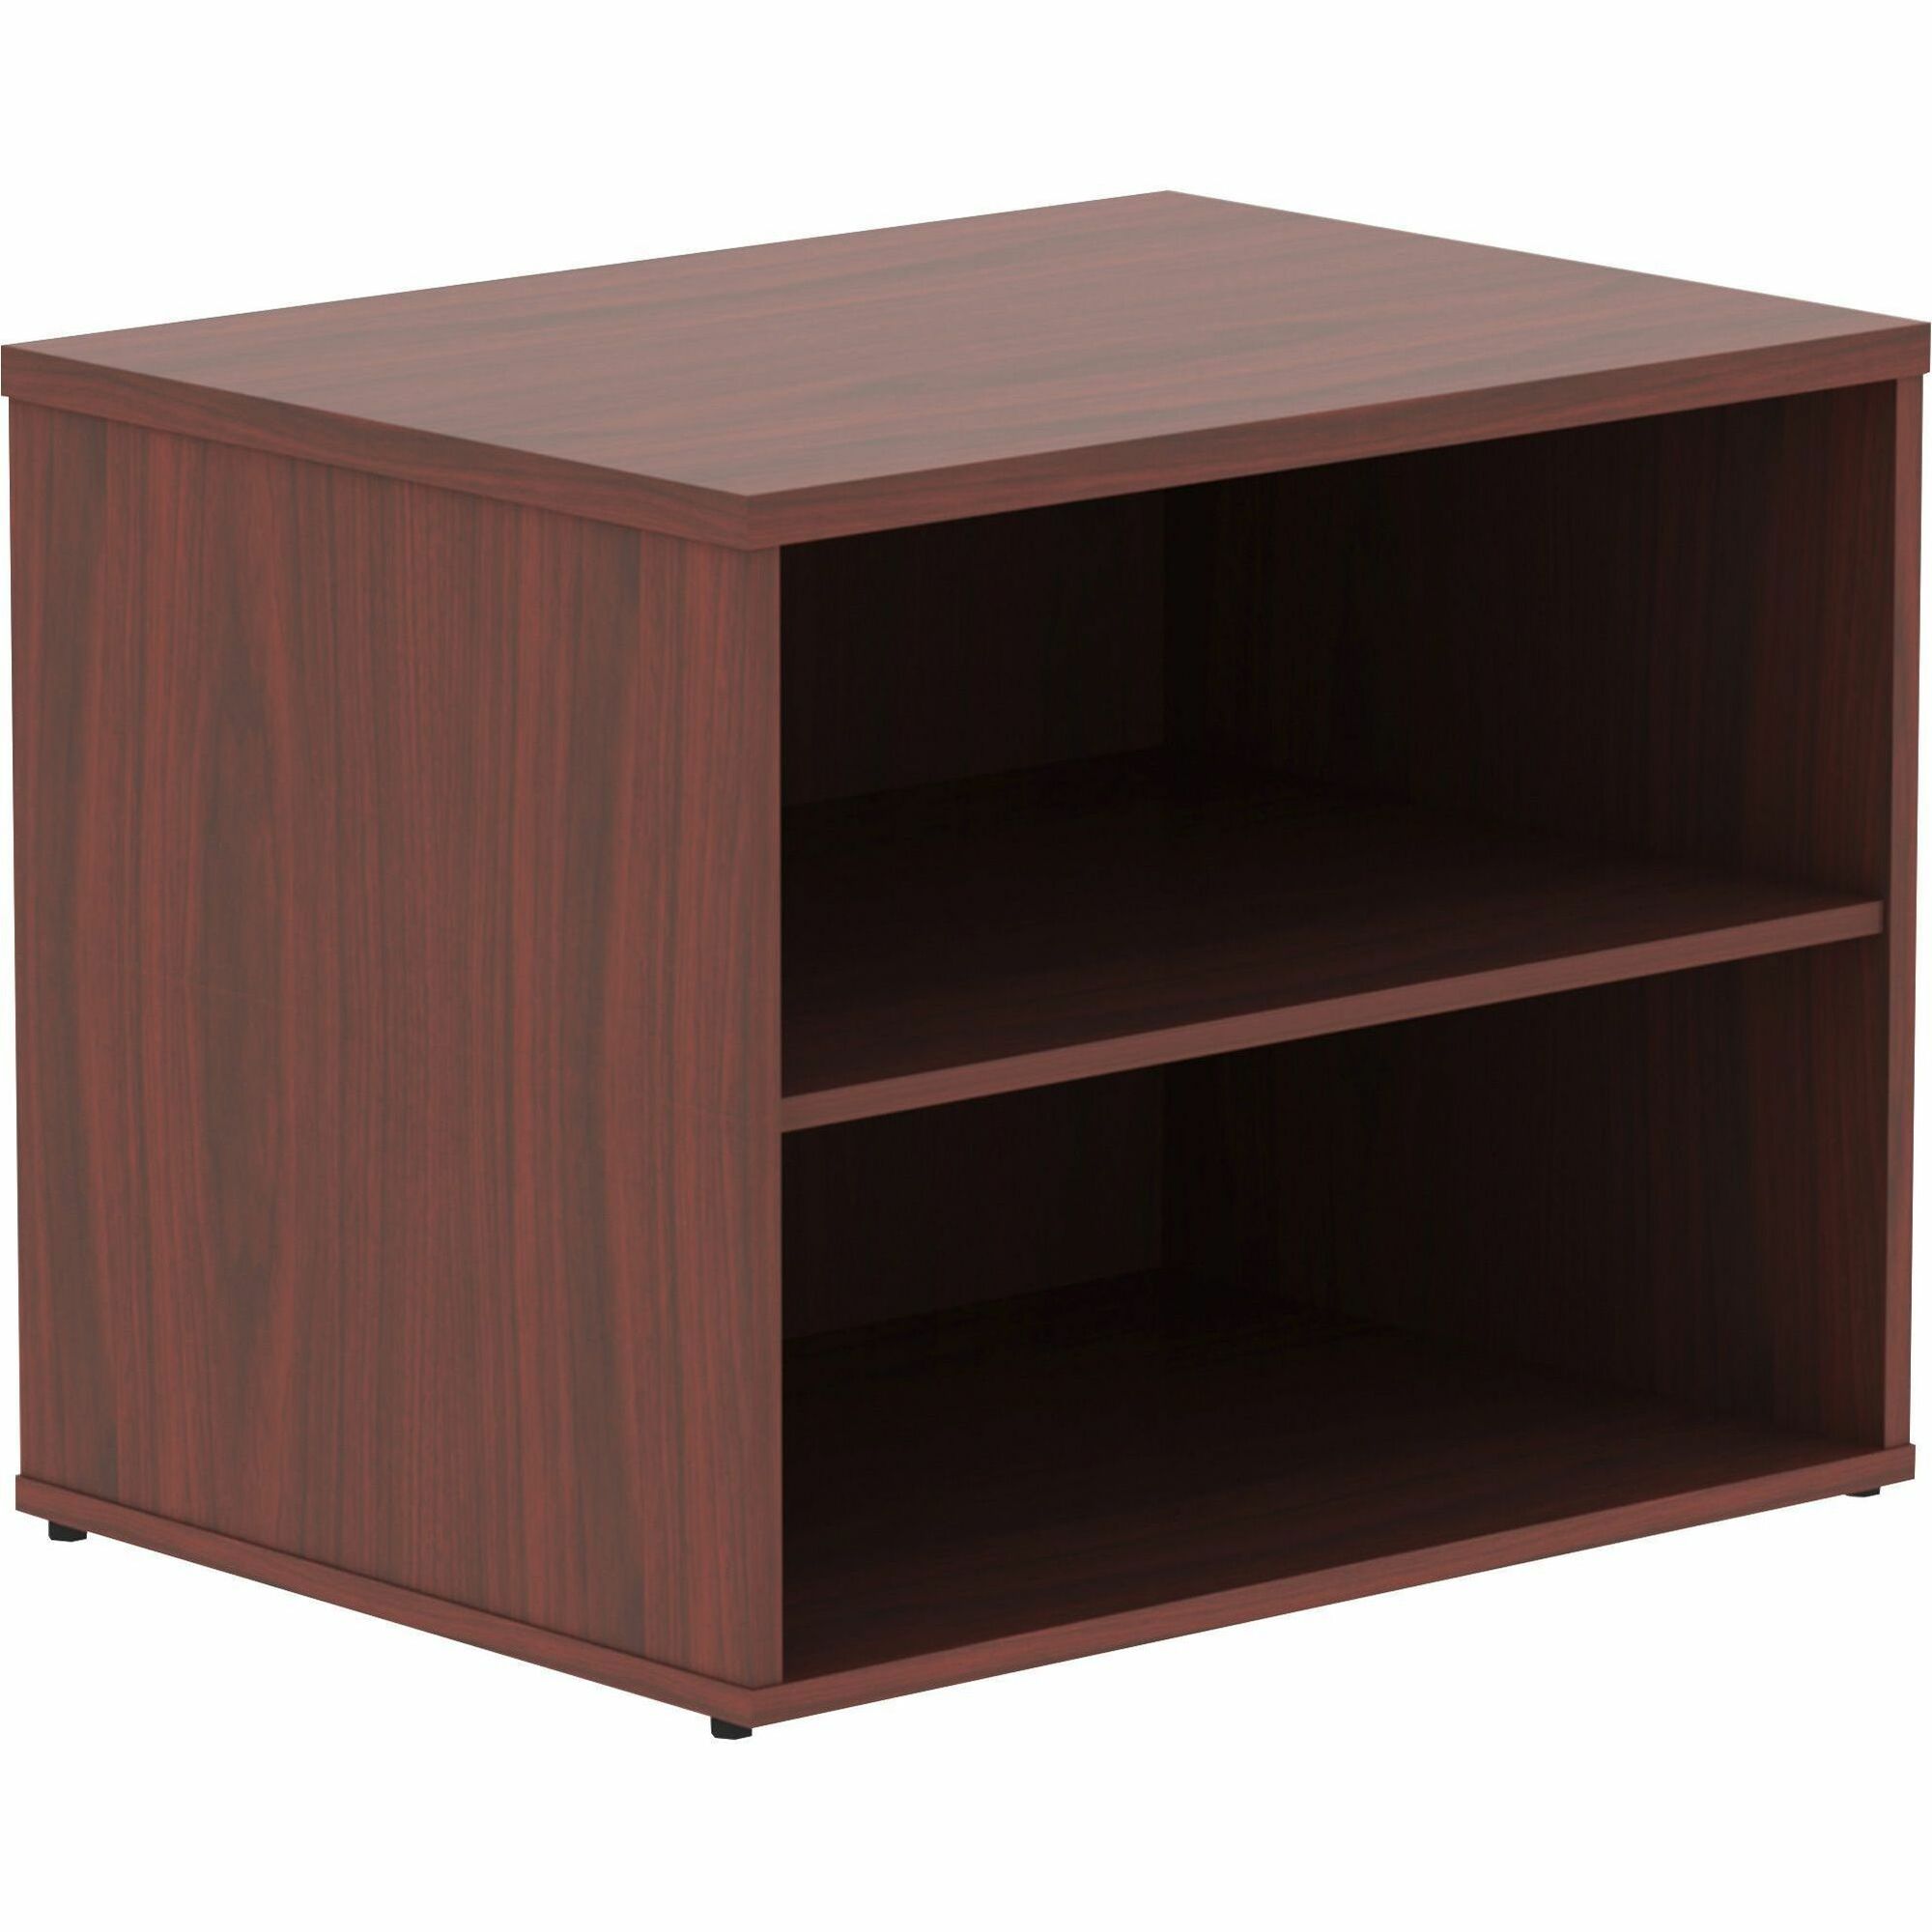 Lorell Relevance Series Storage Cabinet Credenza w/No Doors - 29.5" x 22"23.1" - 2 Shelve(s) - Finish: Mahogany, Laminate - 1